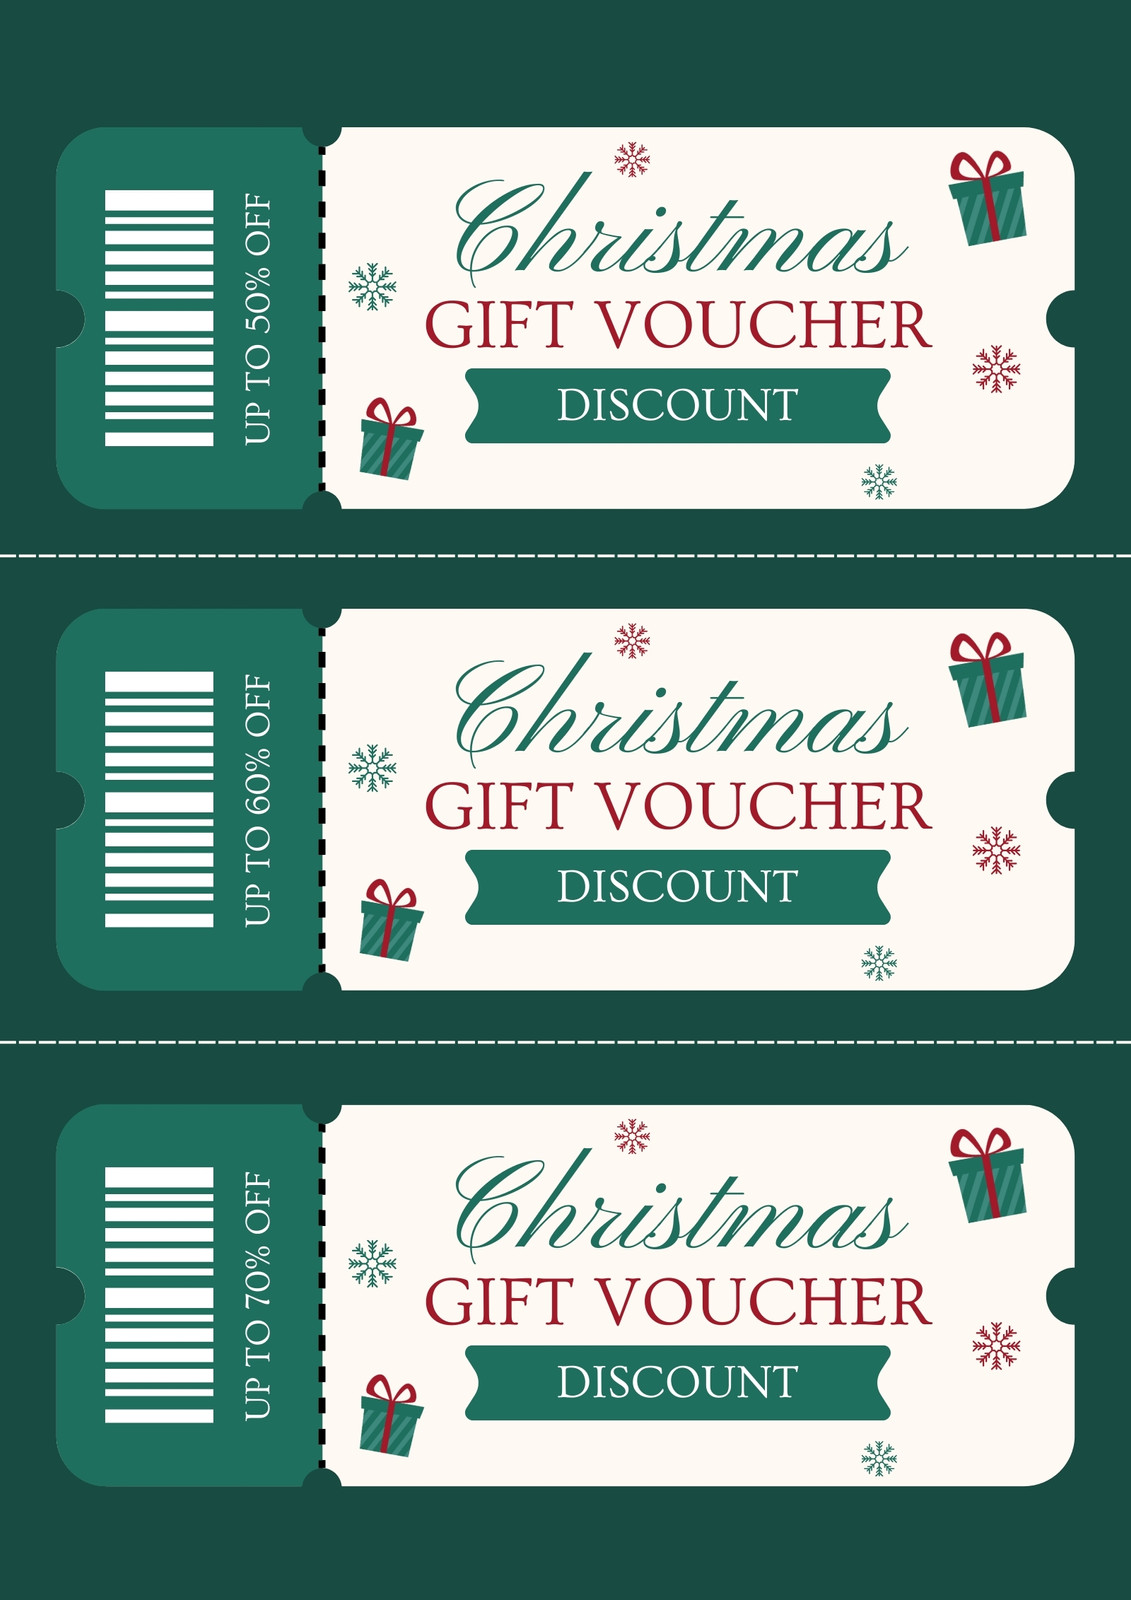 https://marketplace.canva.com/EAF0DHbjF5A/1/0/1131w/canva-green-modern-christmas-gift-voucher-coupon-2tbSF0sqwRI.jpg